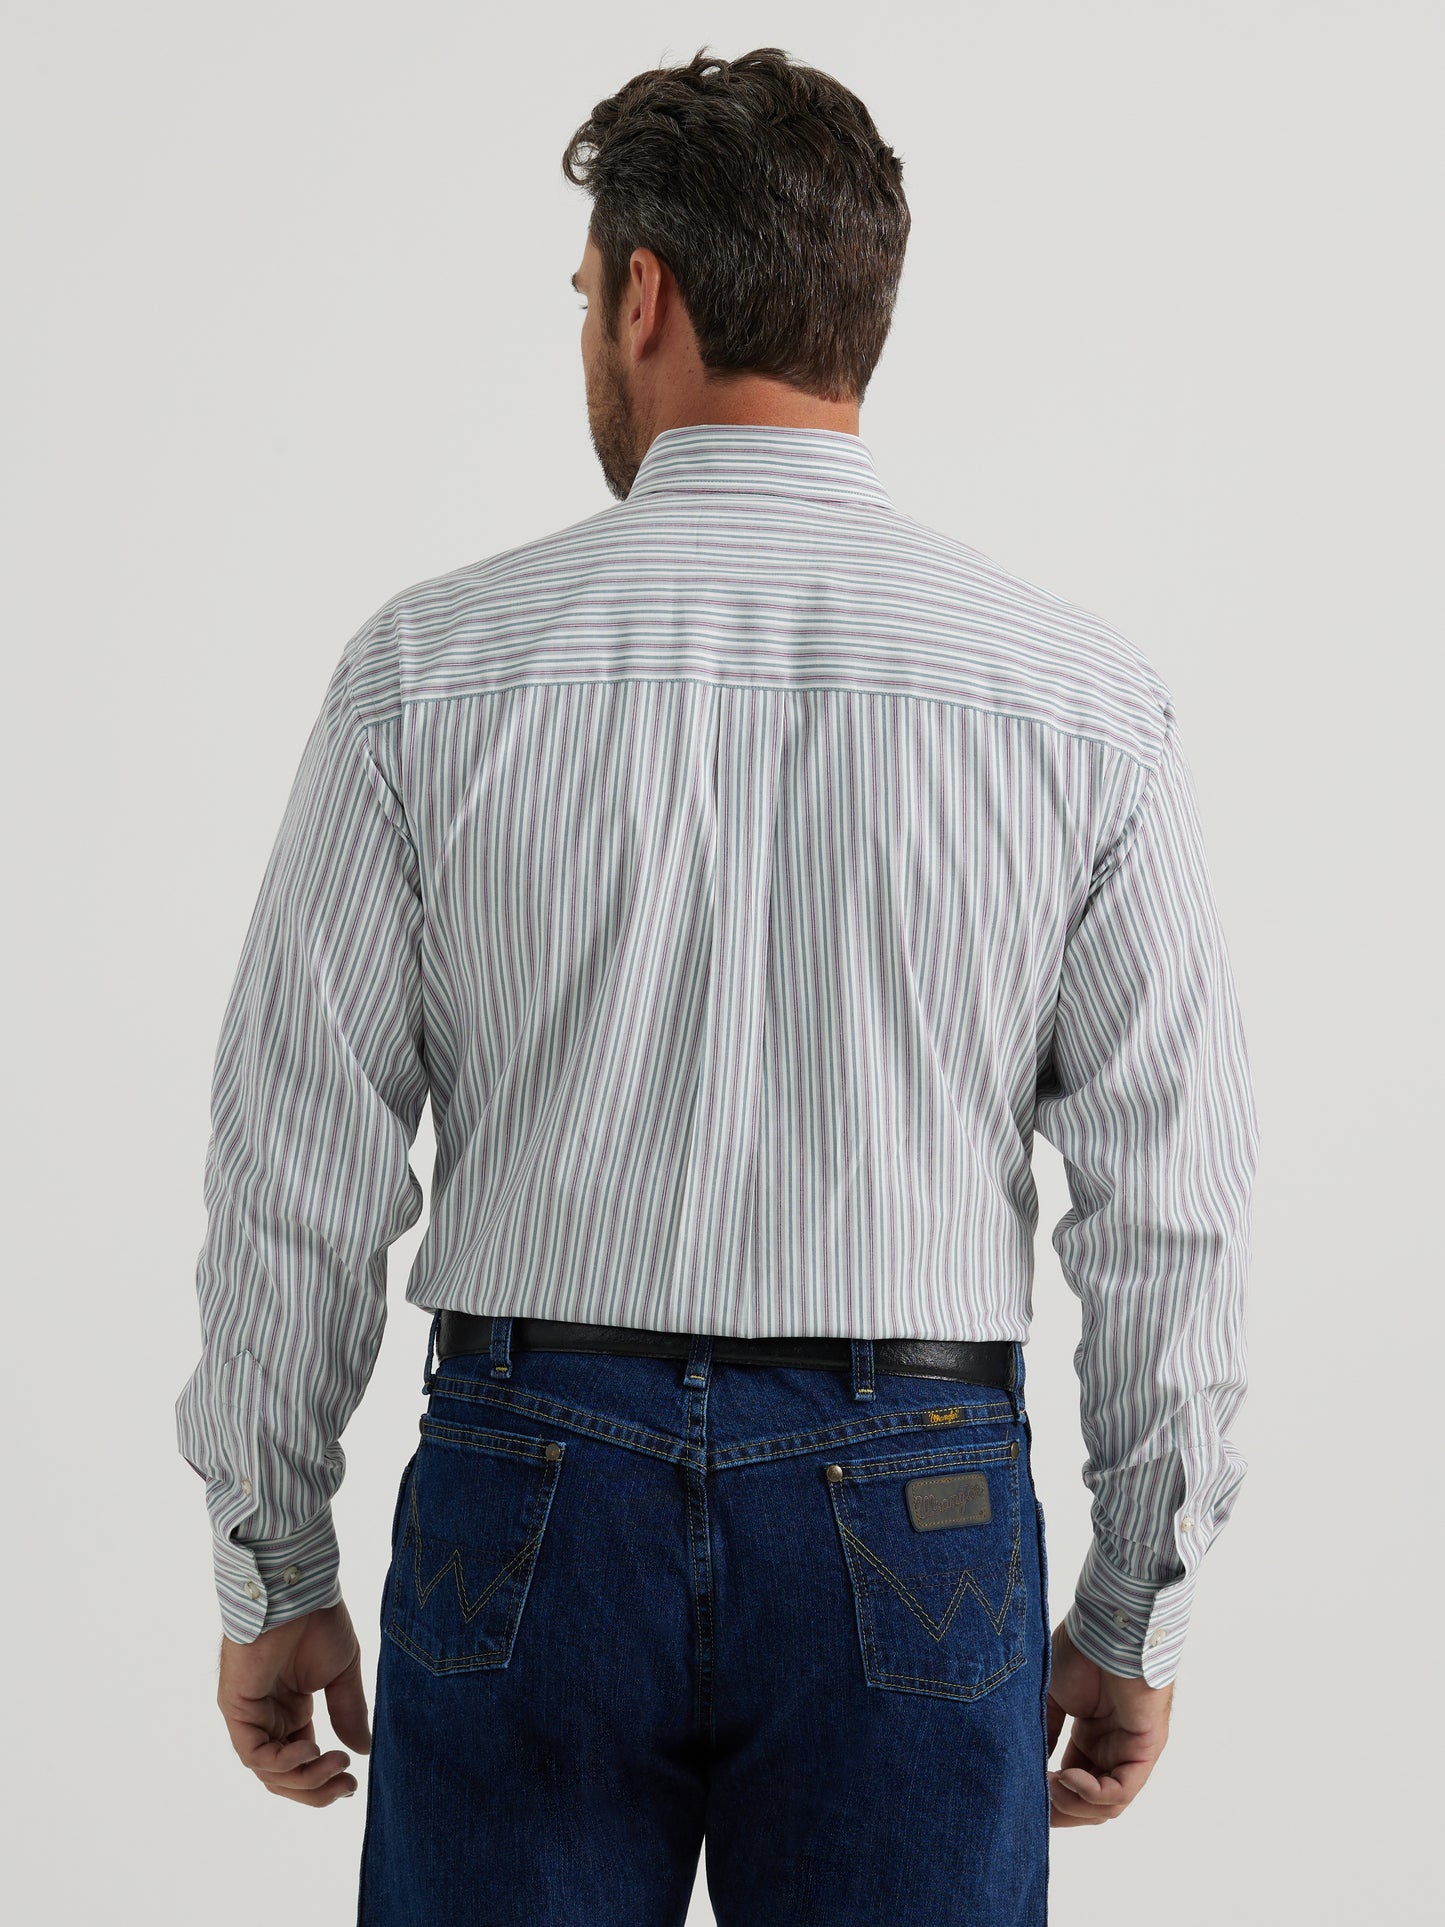 Wrangler Men's George Strait Smoky Stripe Long Sleeve Button Down Shirt